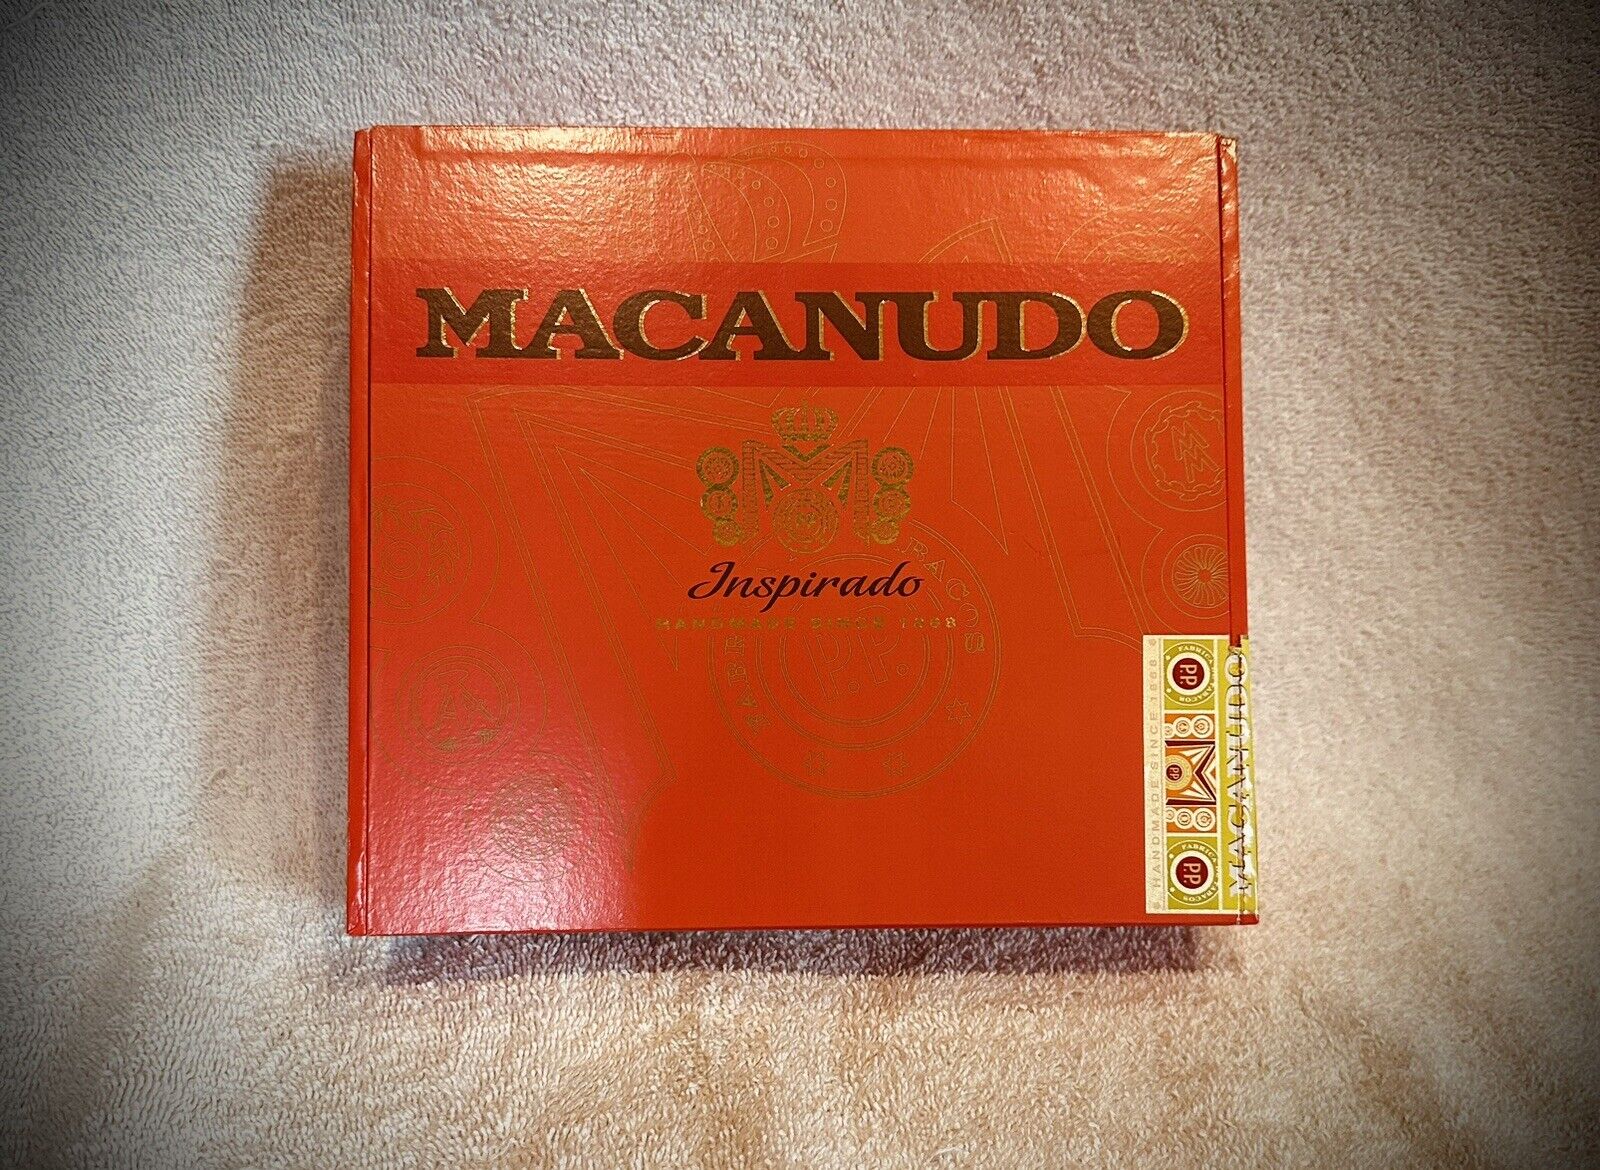 Vintage Macanudo Inspirado Cigar Box.